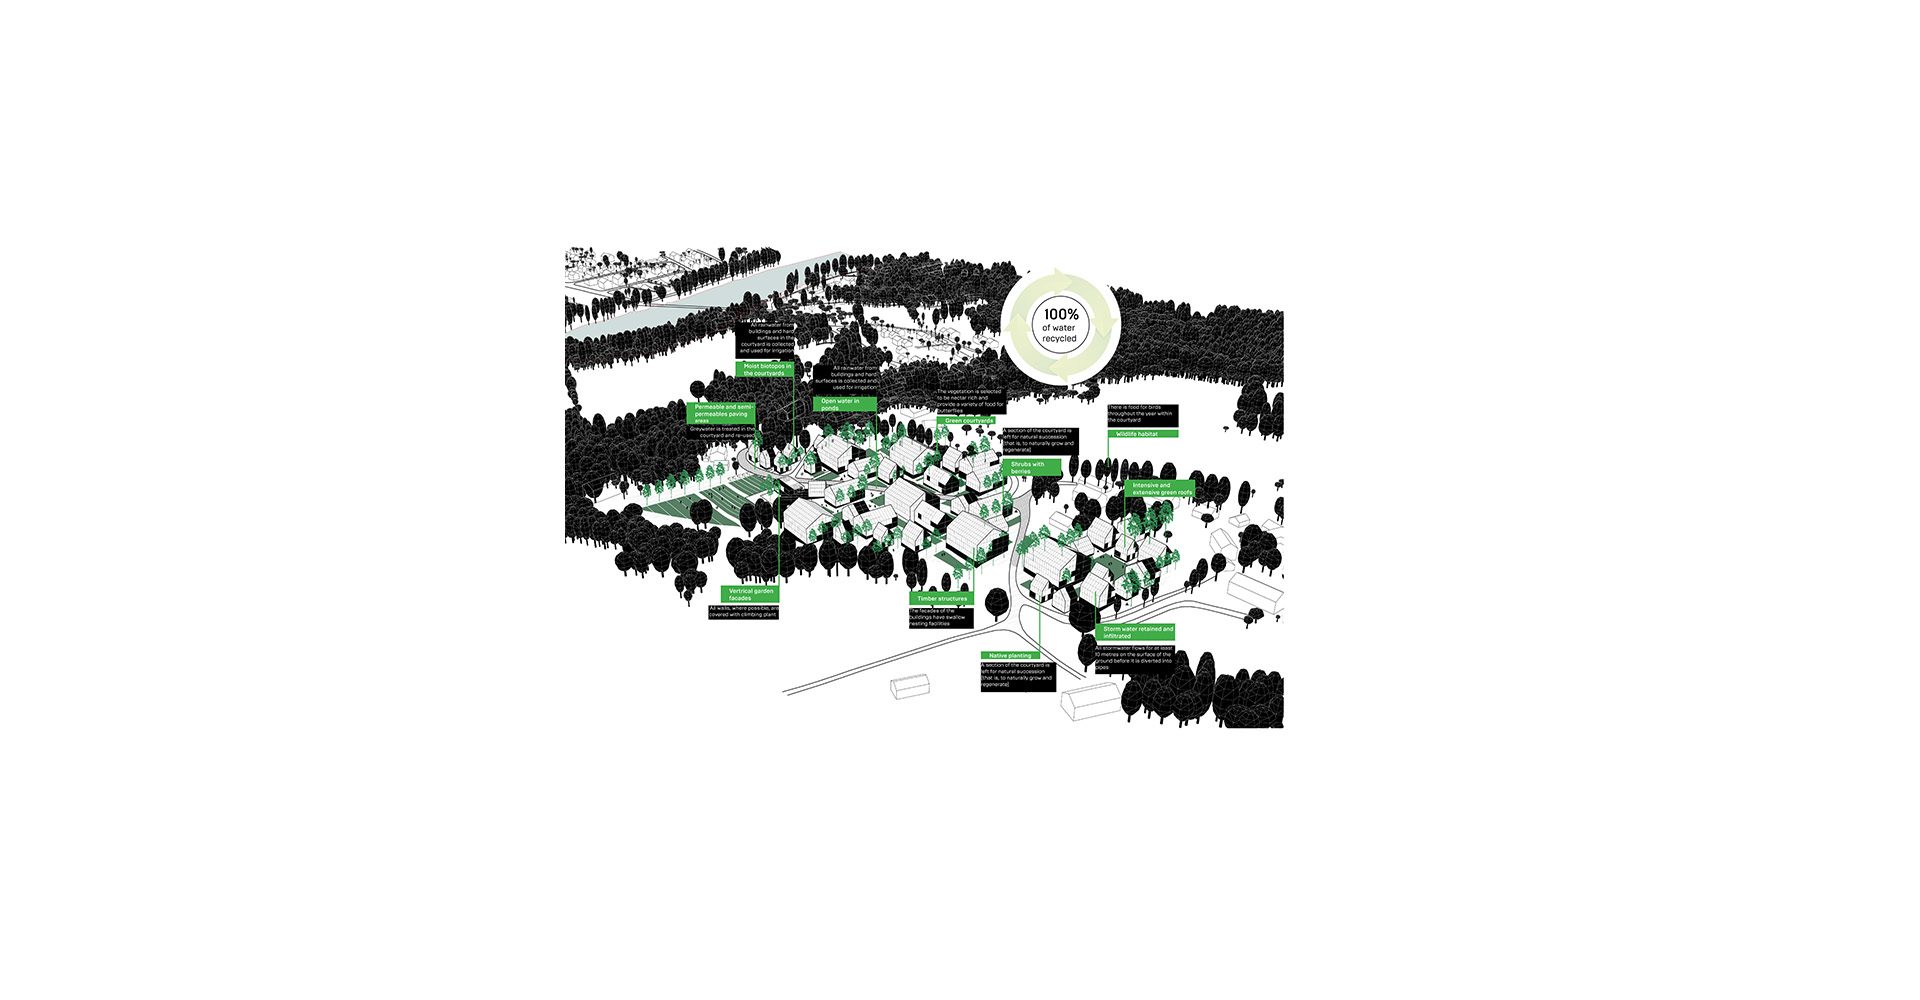 Europan16_Share-Typology-Proposals-_Self-Nurturing-City Diagram 3